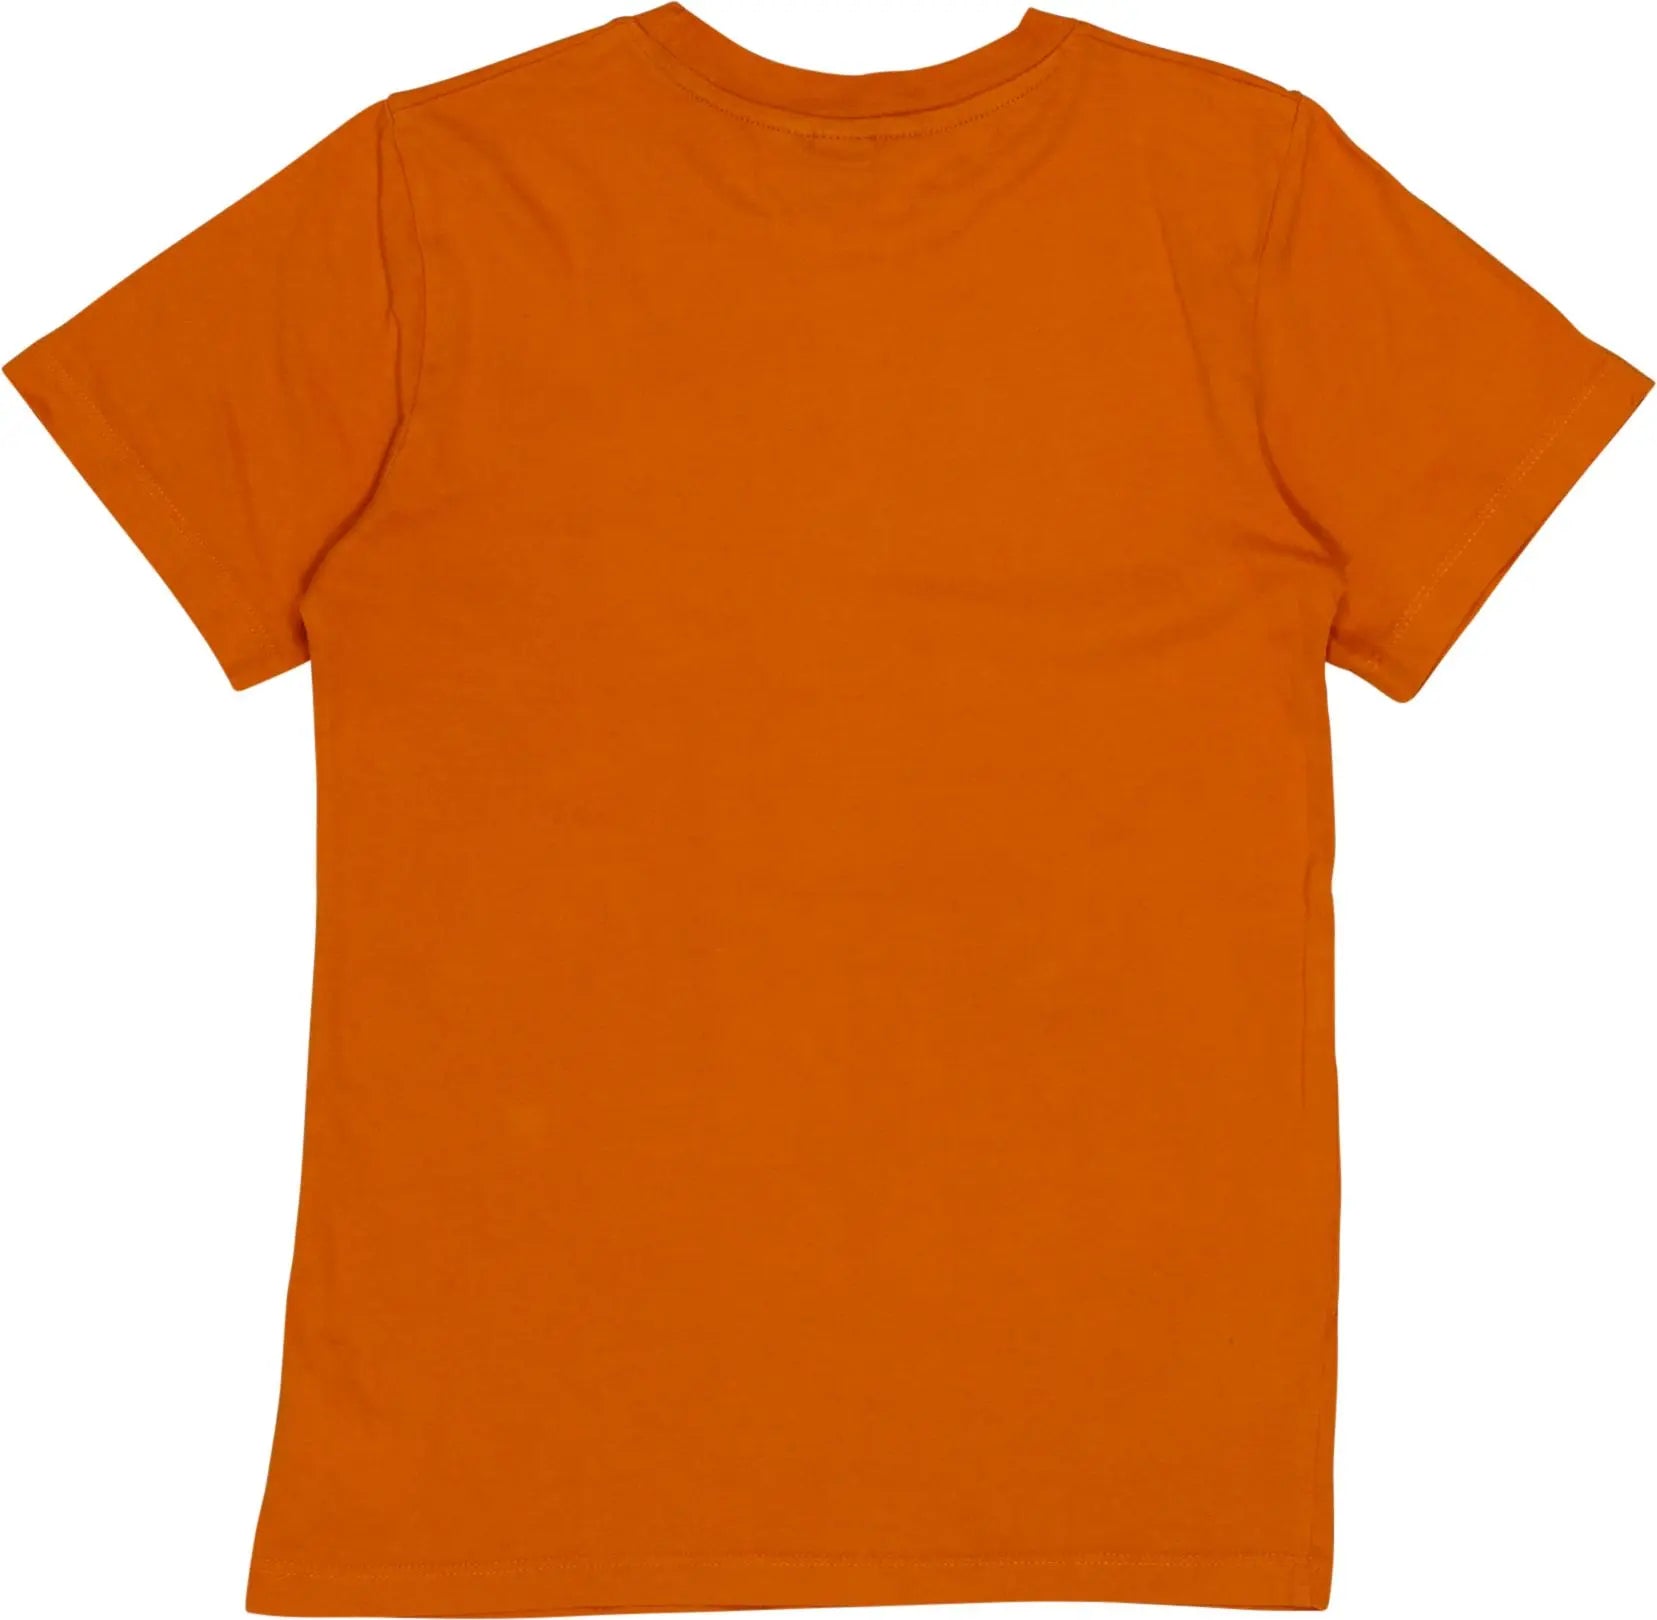 H&M - Orange T-shirt- ThriftTale.com - Vintage and second handclothing